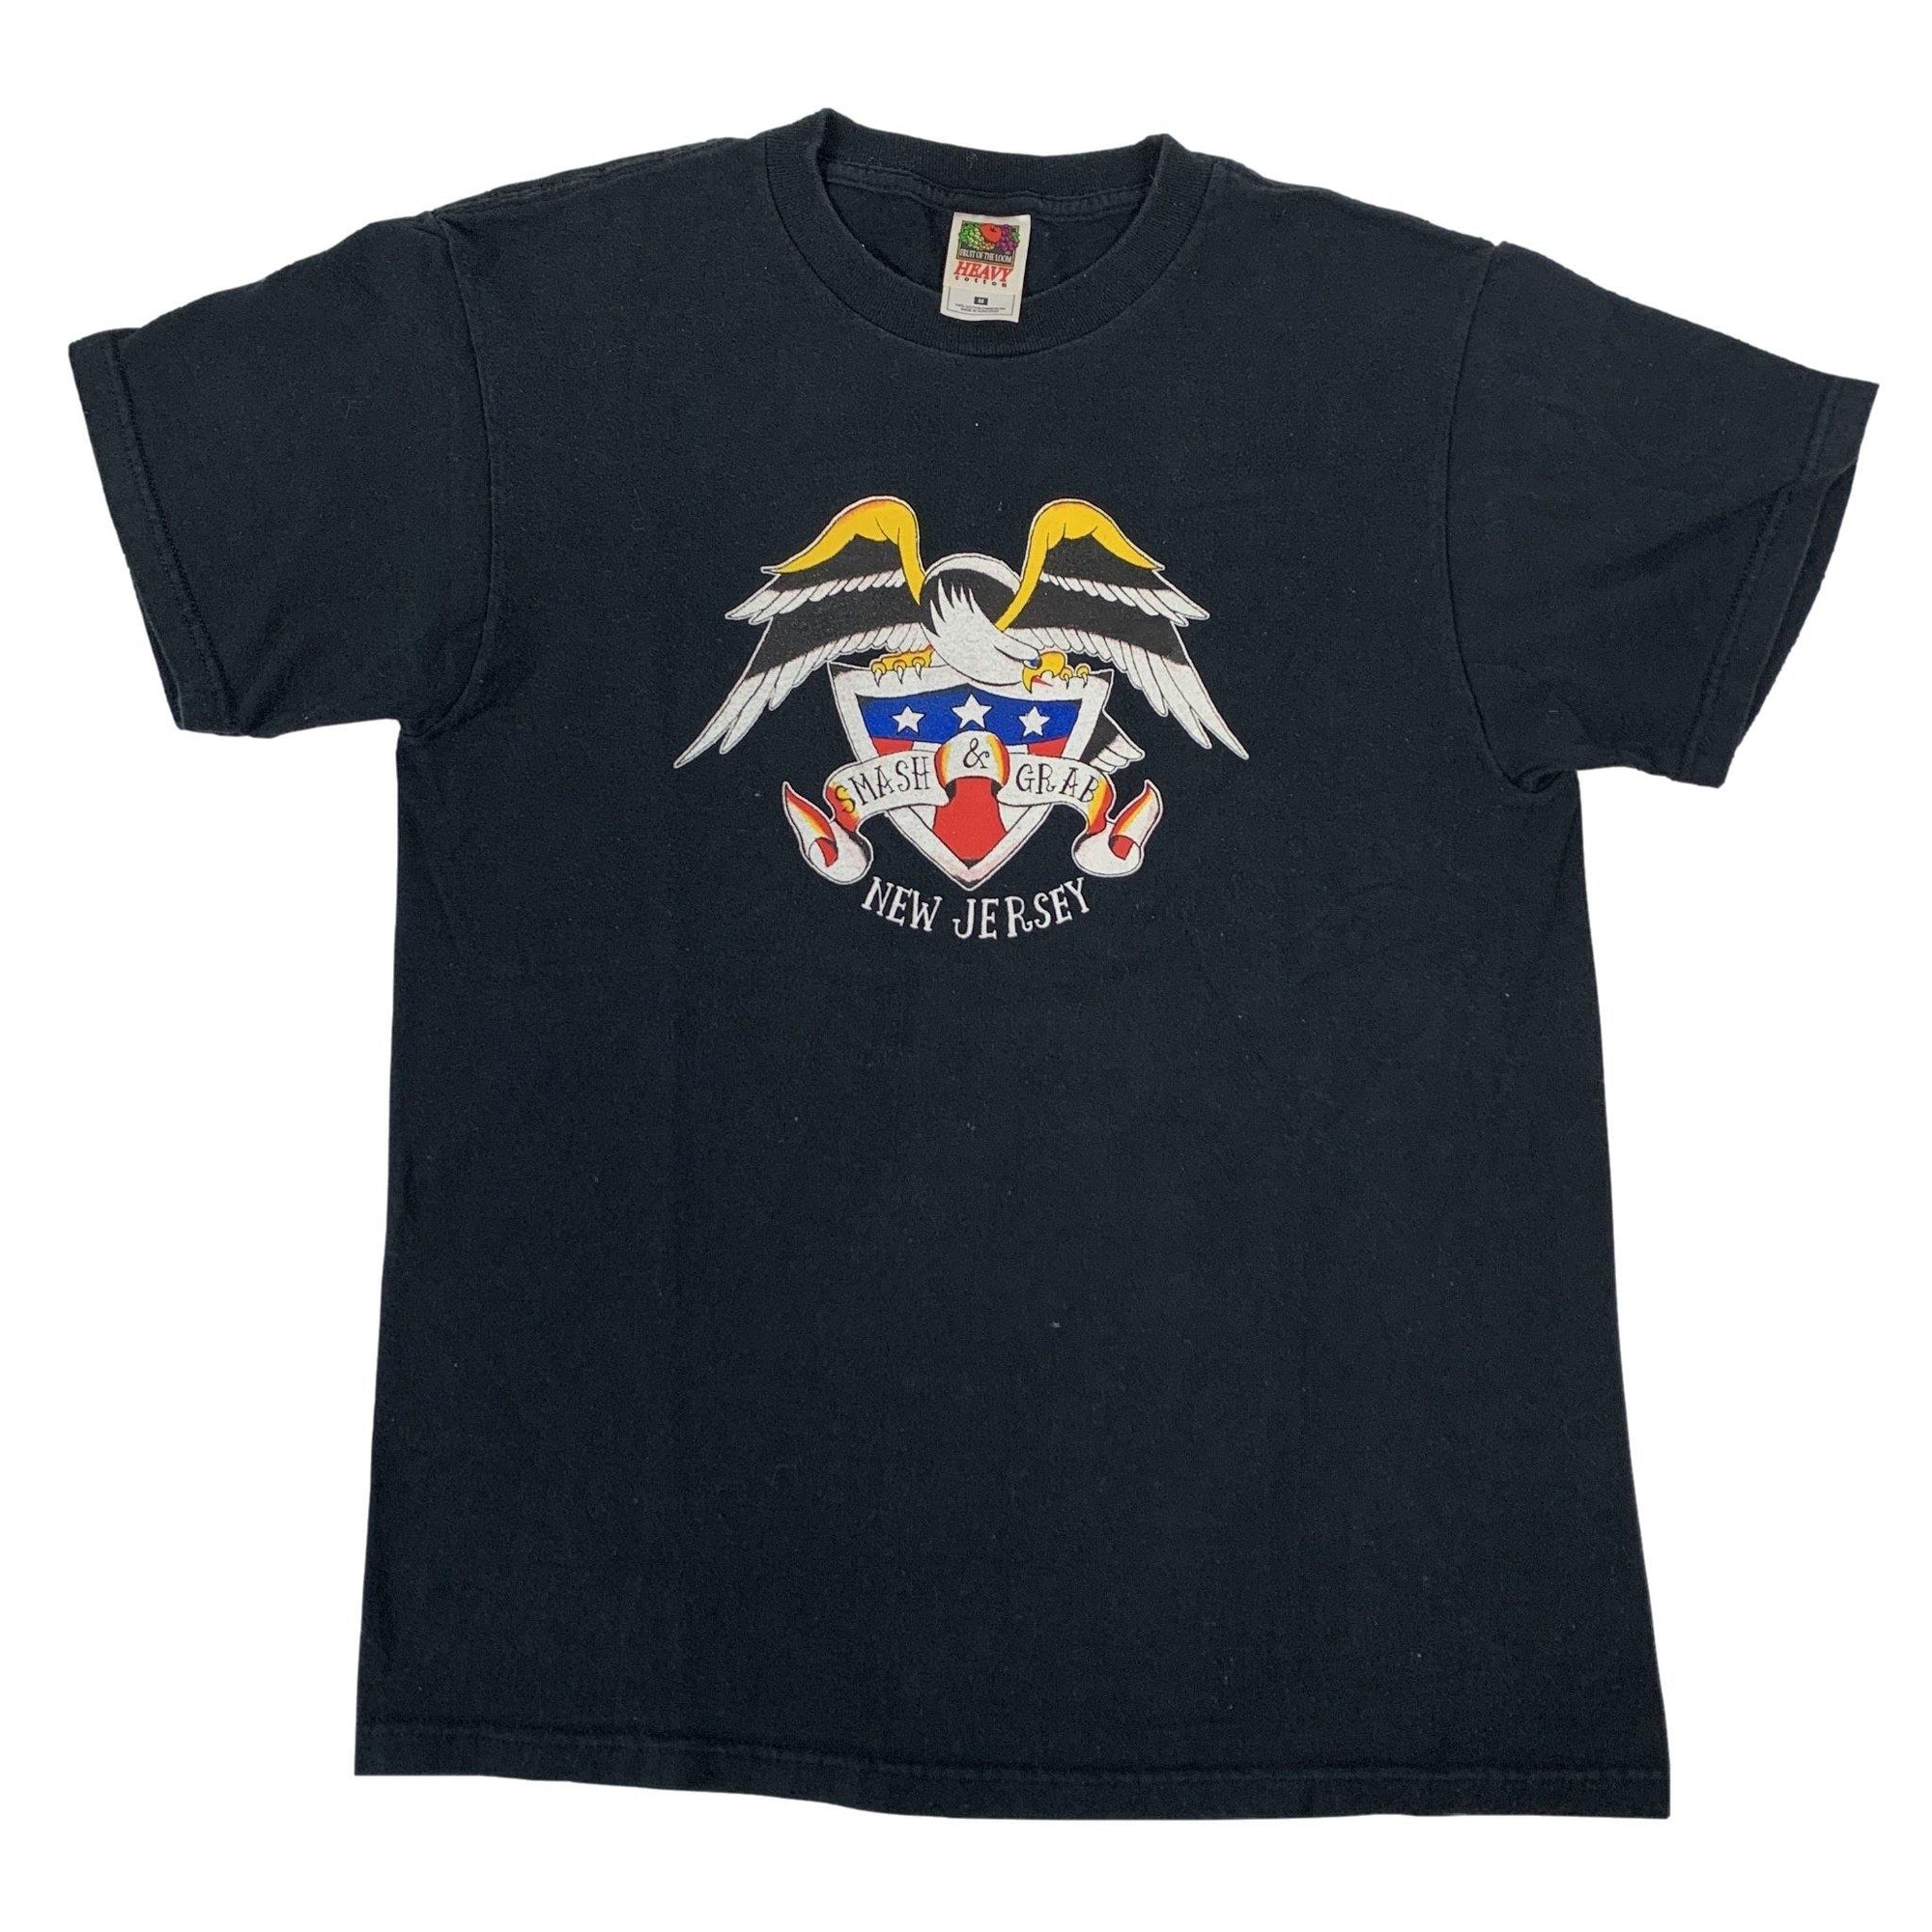 Vintage Smash & Grab "New Jersey" T-Shirt - jointcustodydc